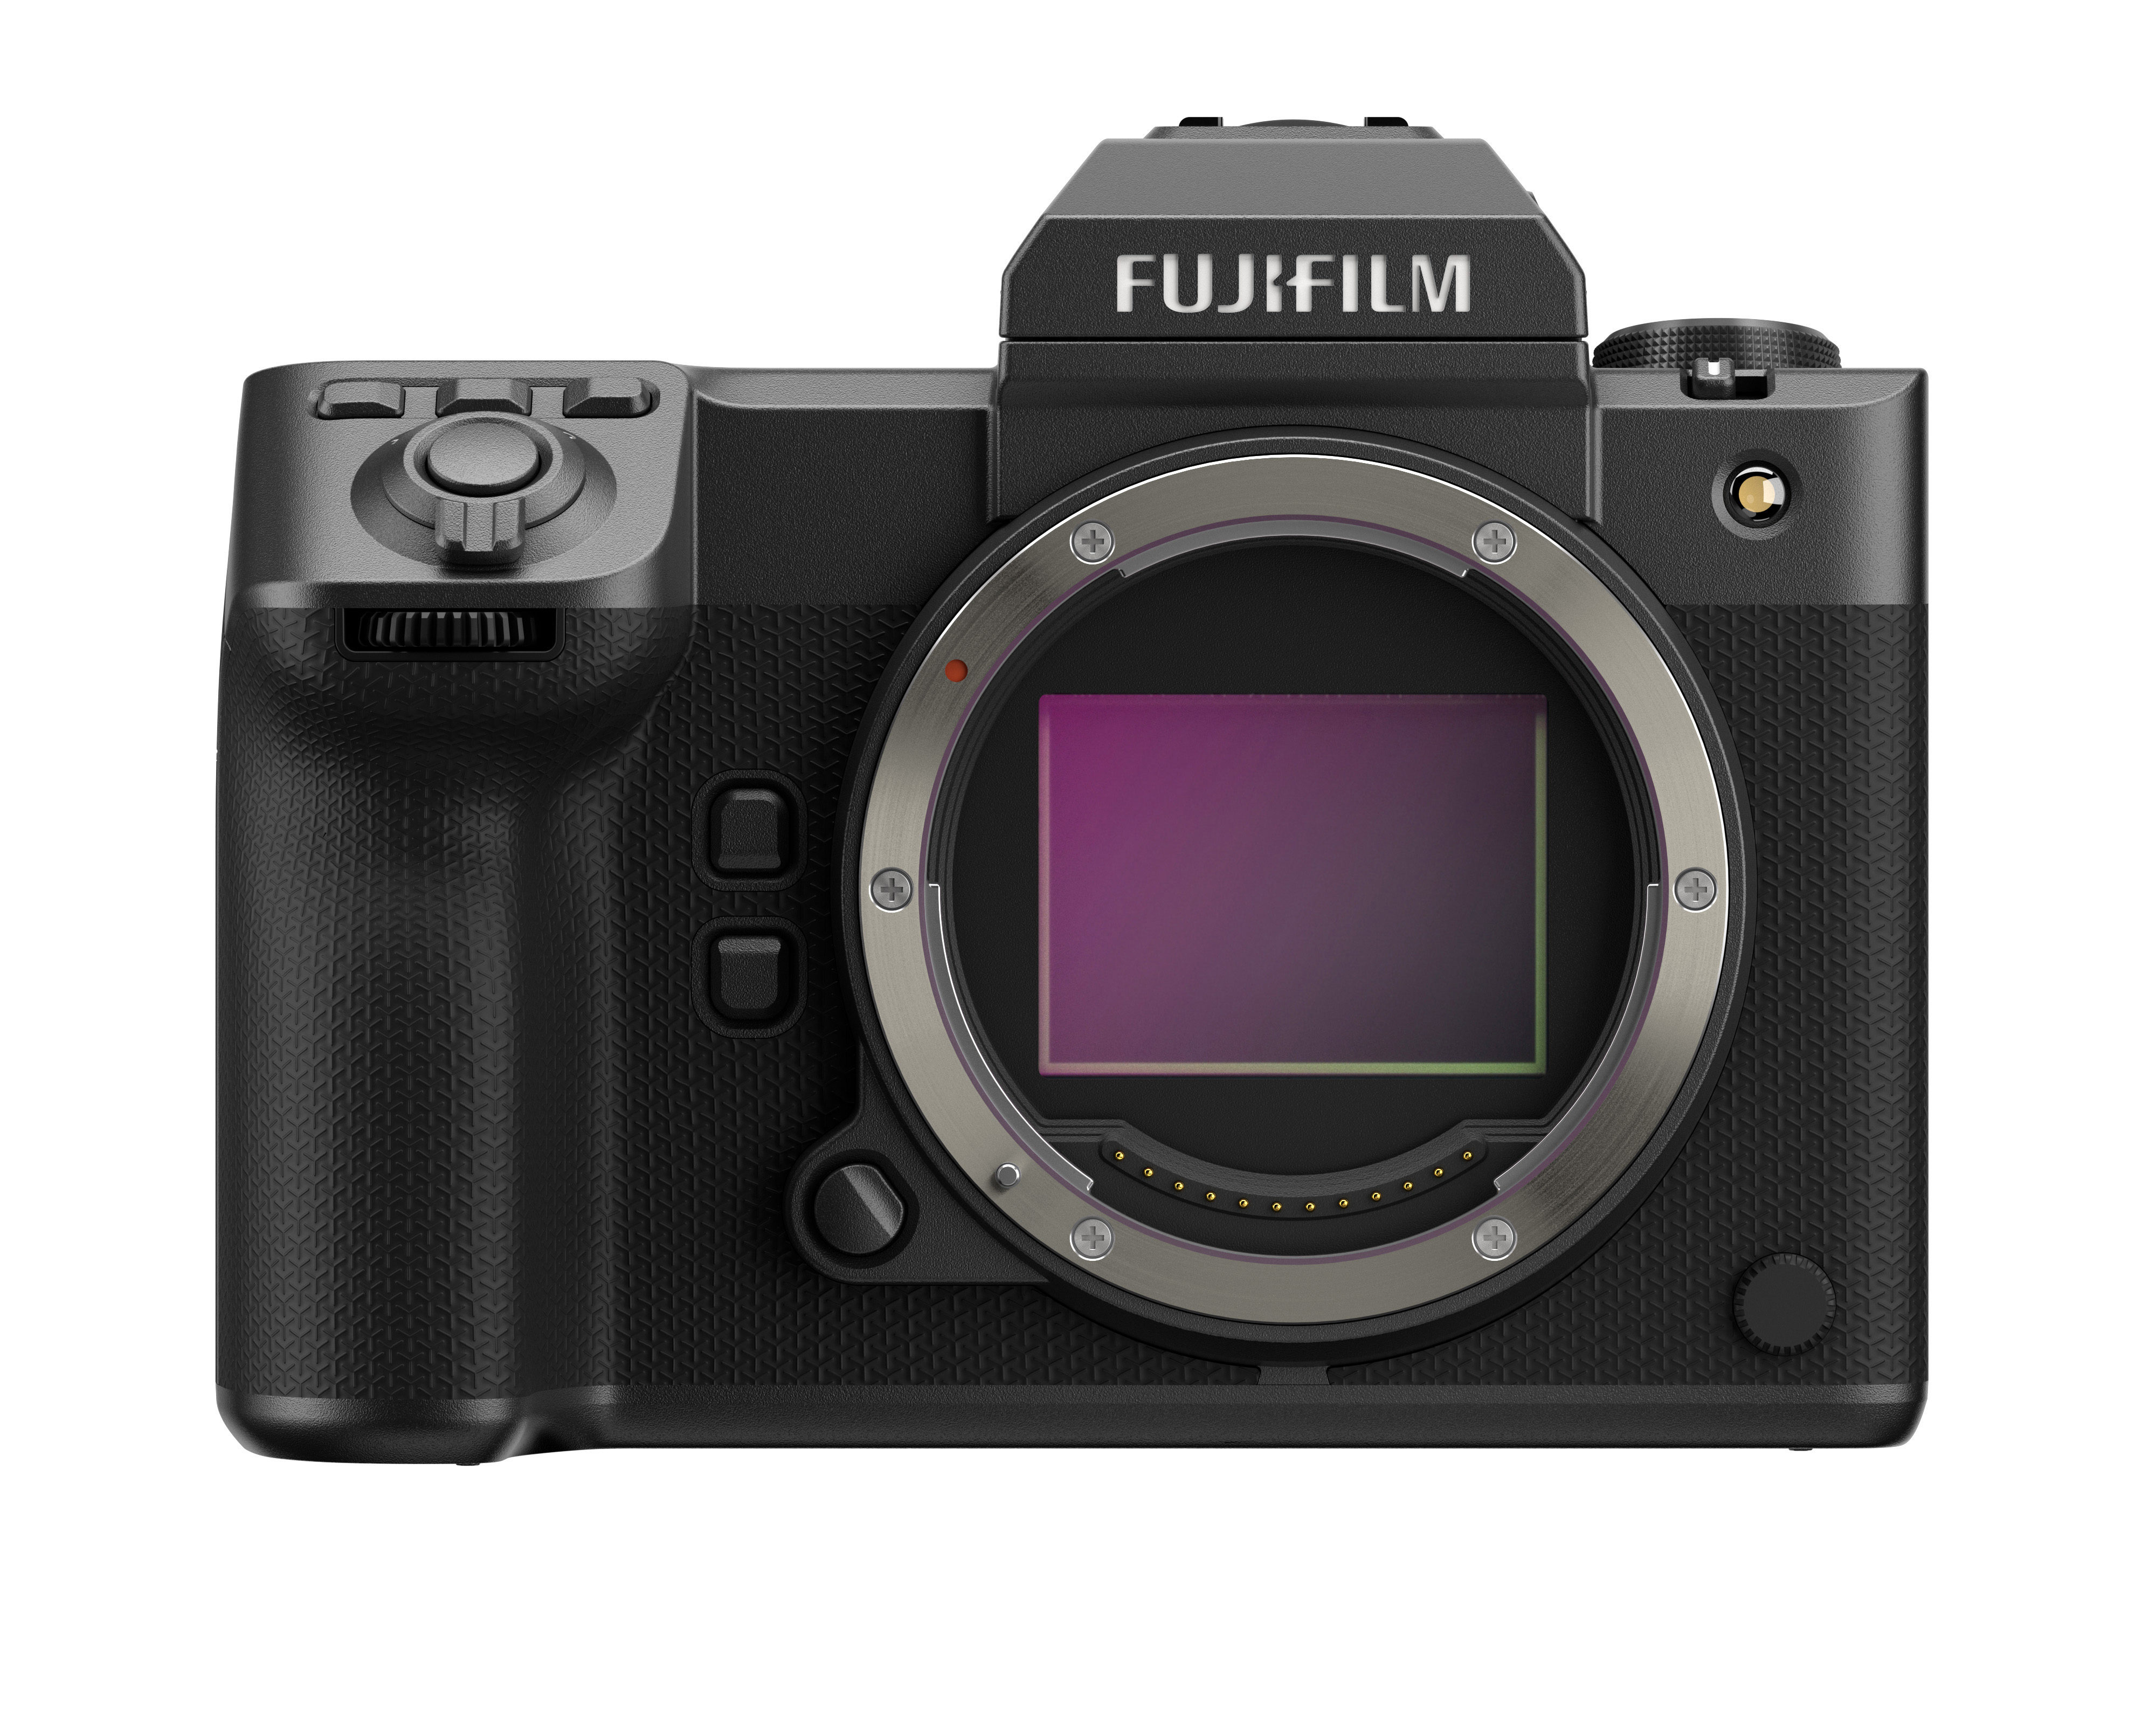 New FUJIFILM GFX100 II Mirrorless Digital Camera Announced